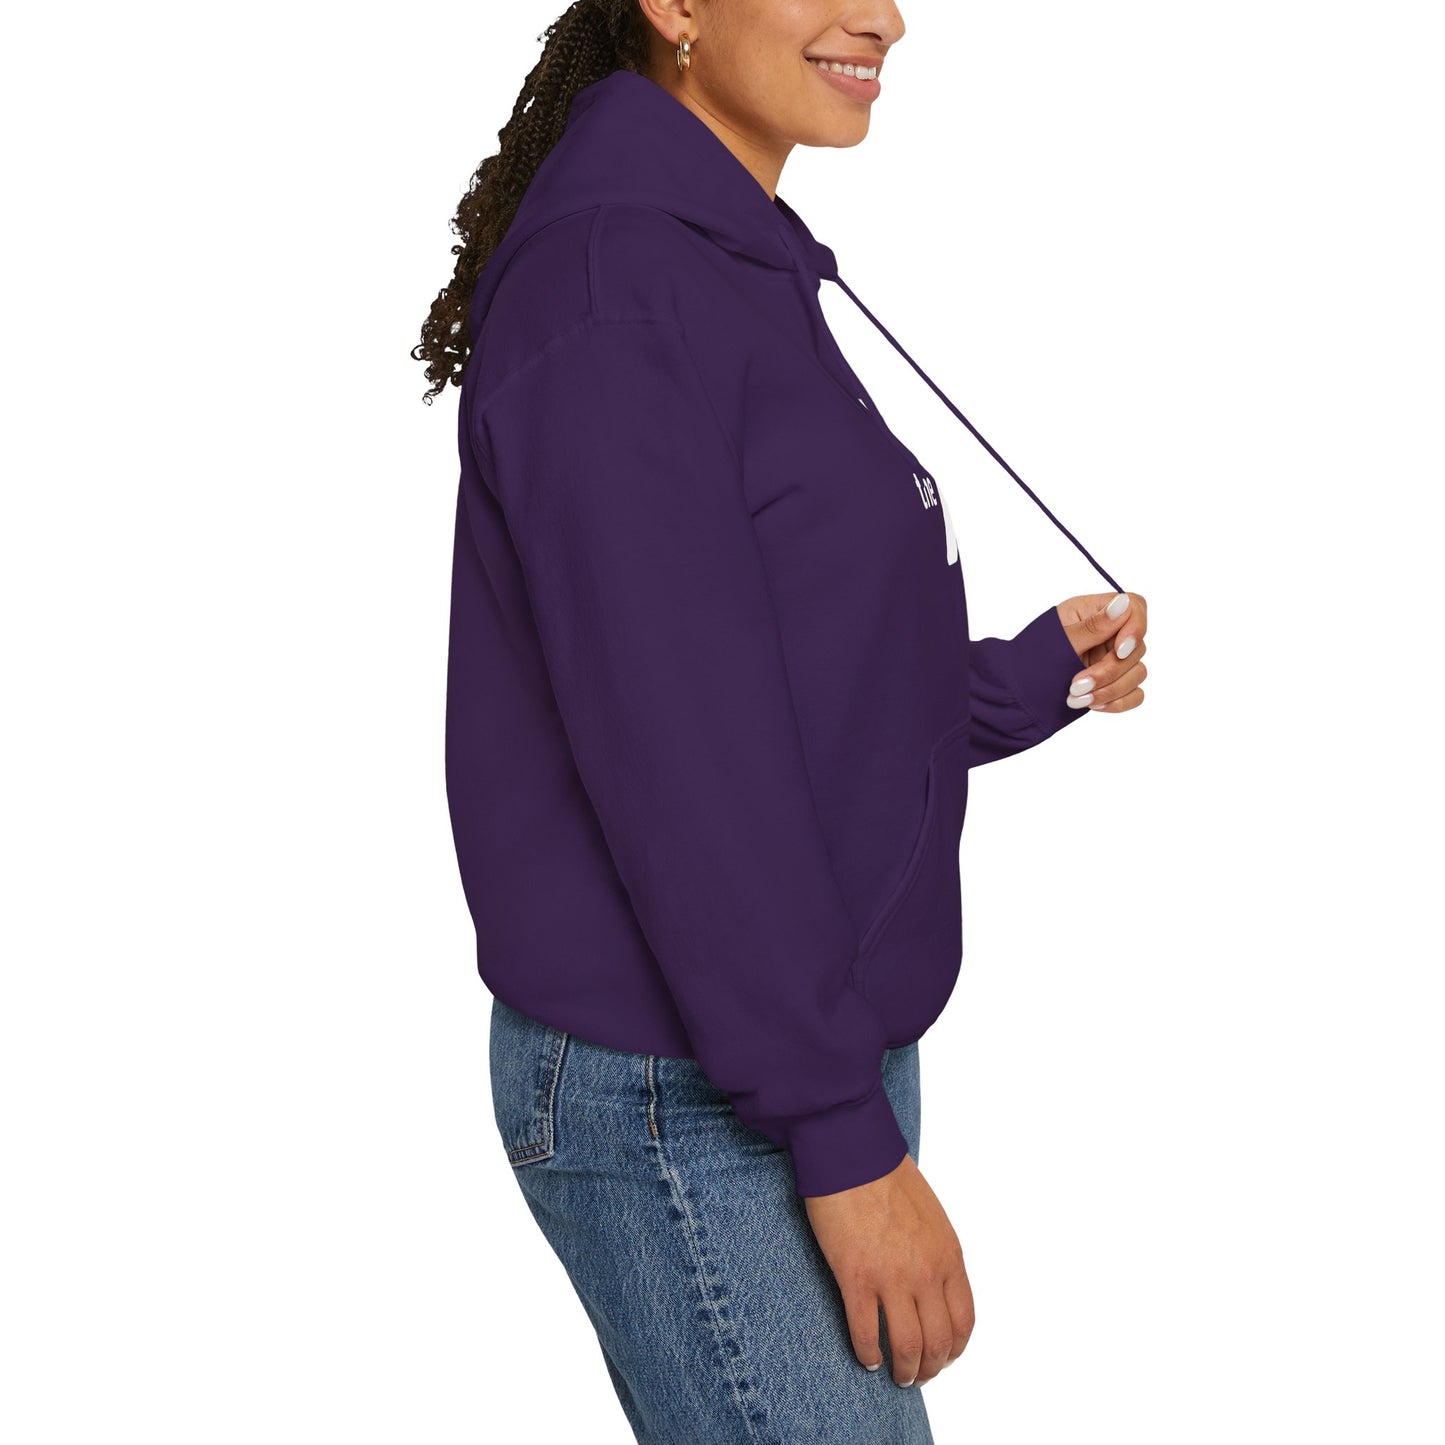 Y logo Unisex Heavy Blend™ Hooded Sweatshirt